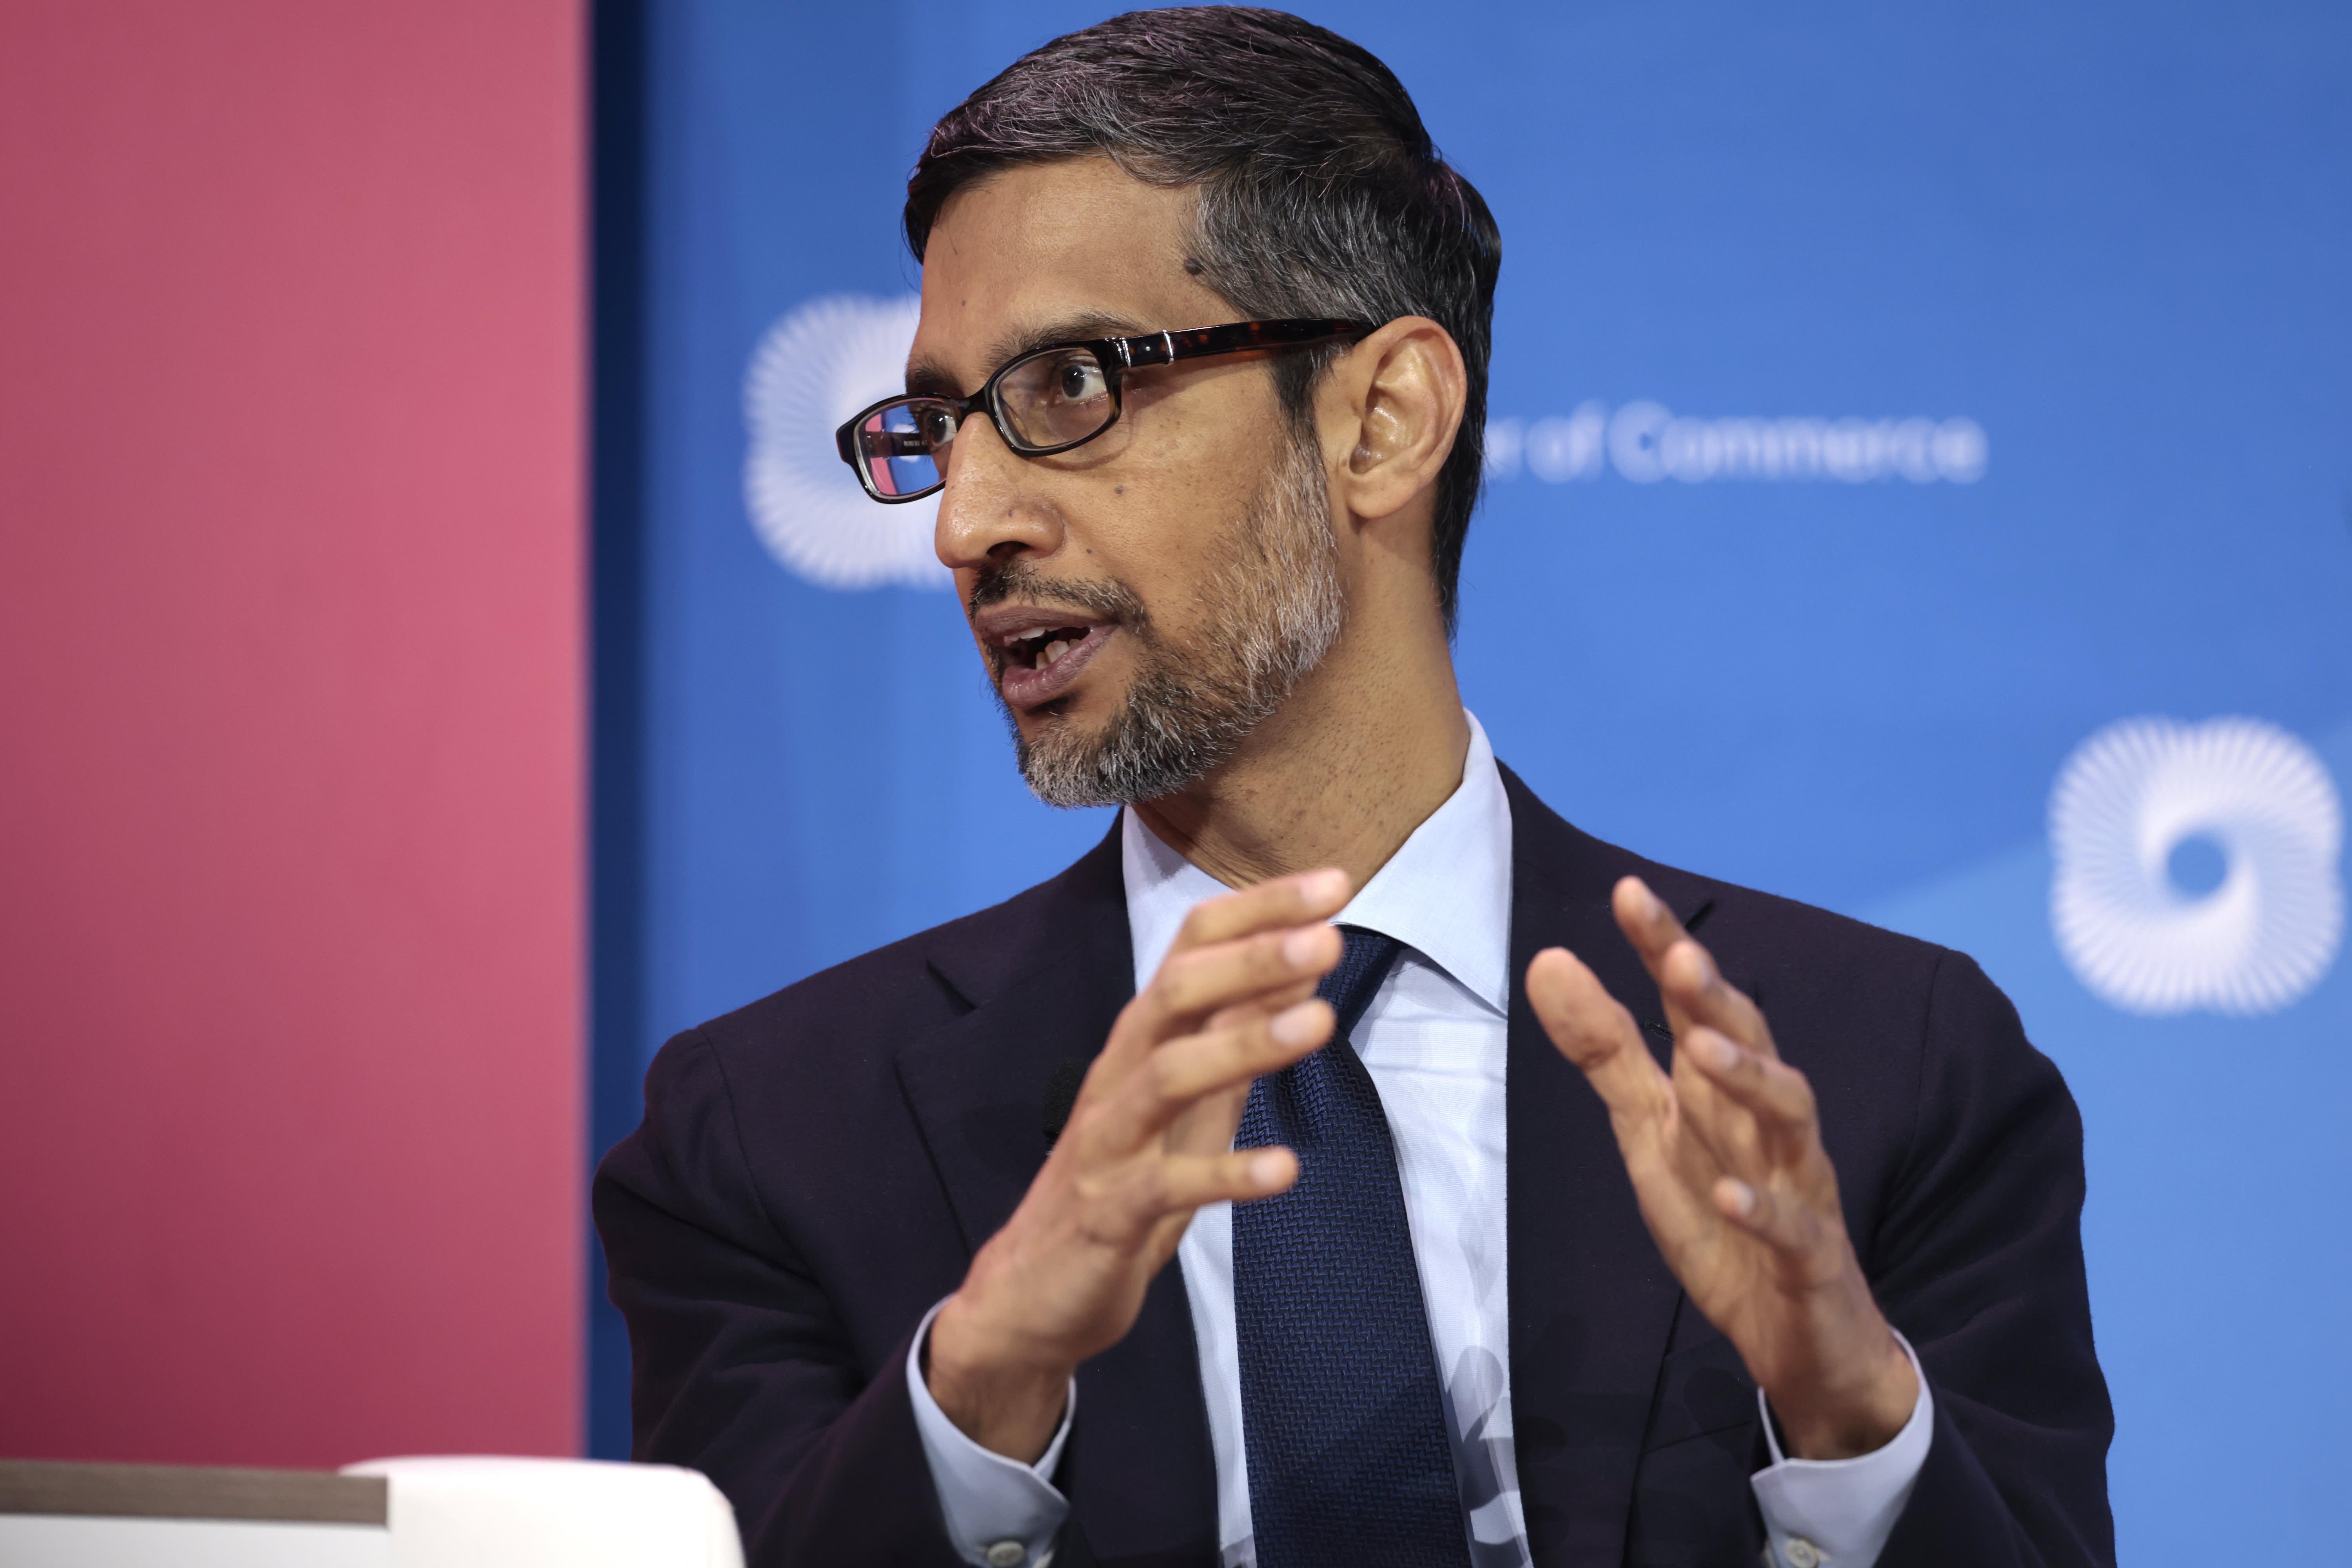 Google CEO Sundar Pichai warns society to prepare for the impact of AI acceleration